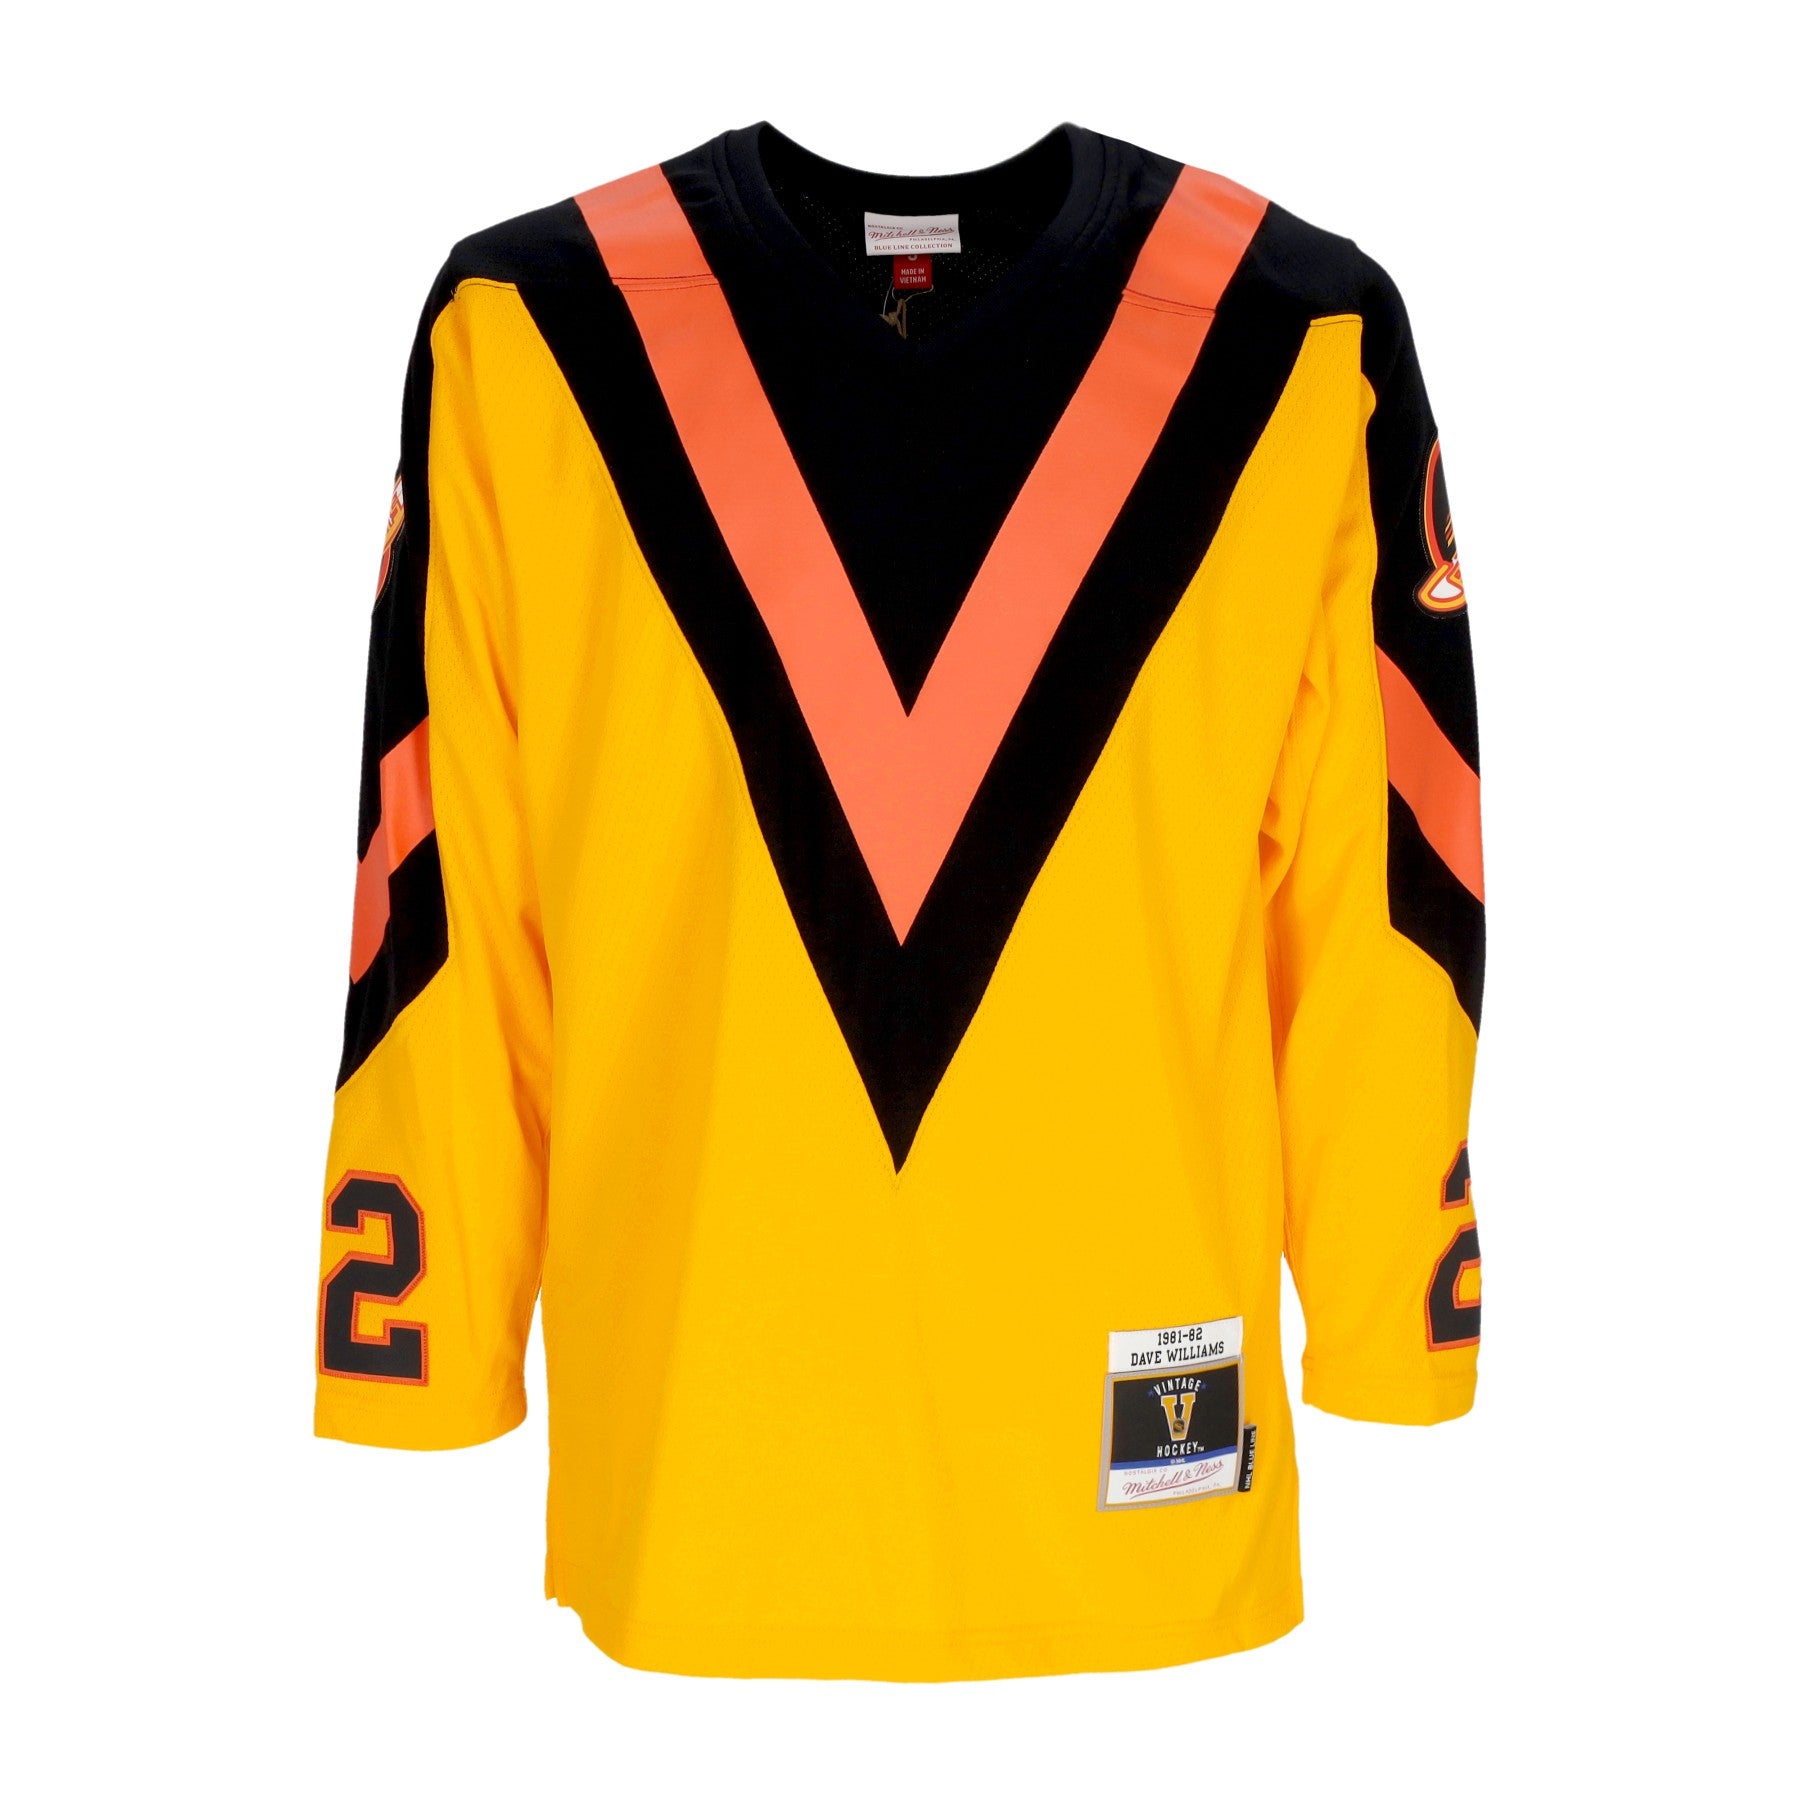 Mitchell & Ness, Casacca Hockey Uomo Nhl Yellow Jersey 1981 No 22 Williams Vancan, Yellow